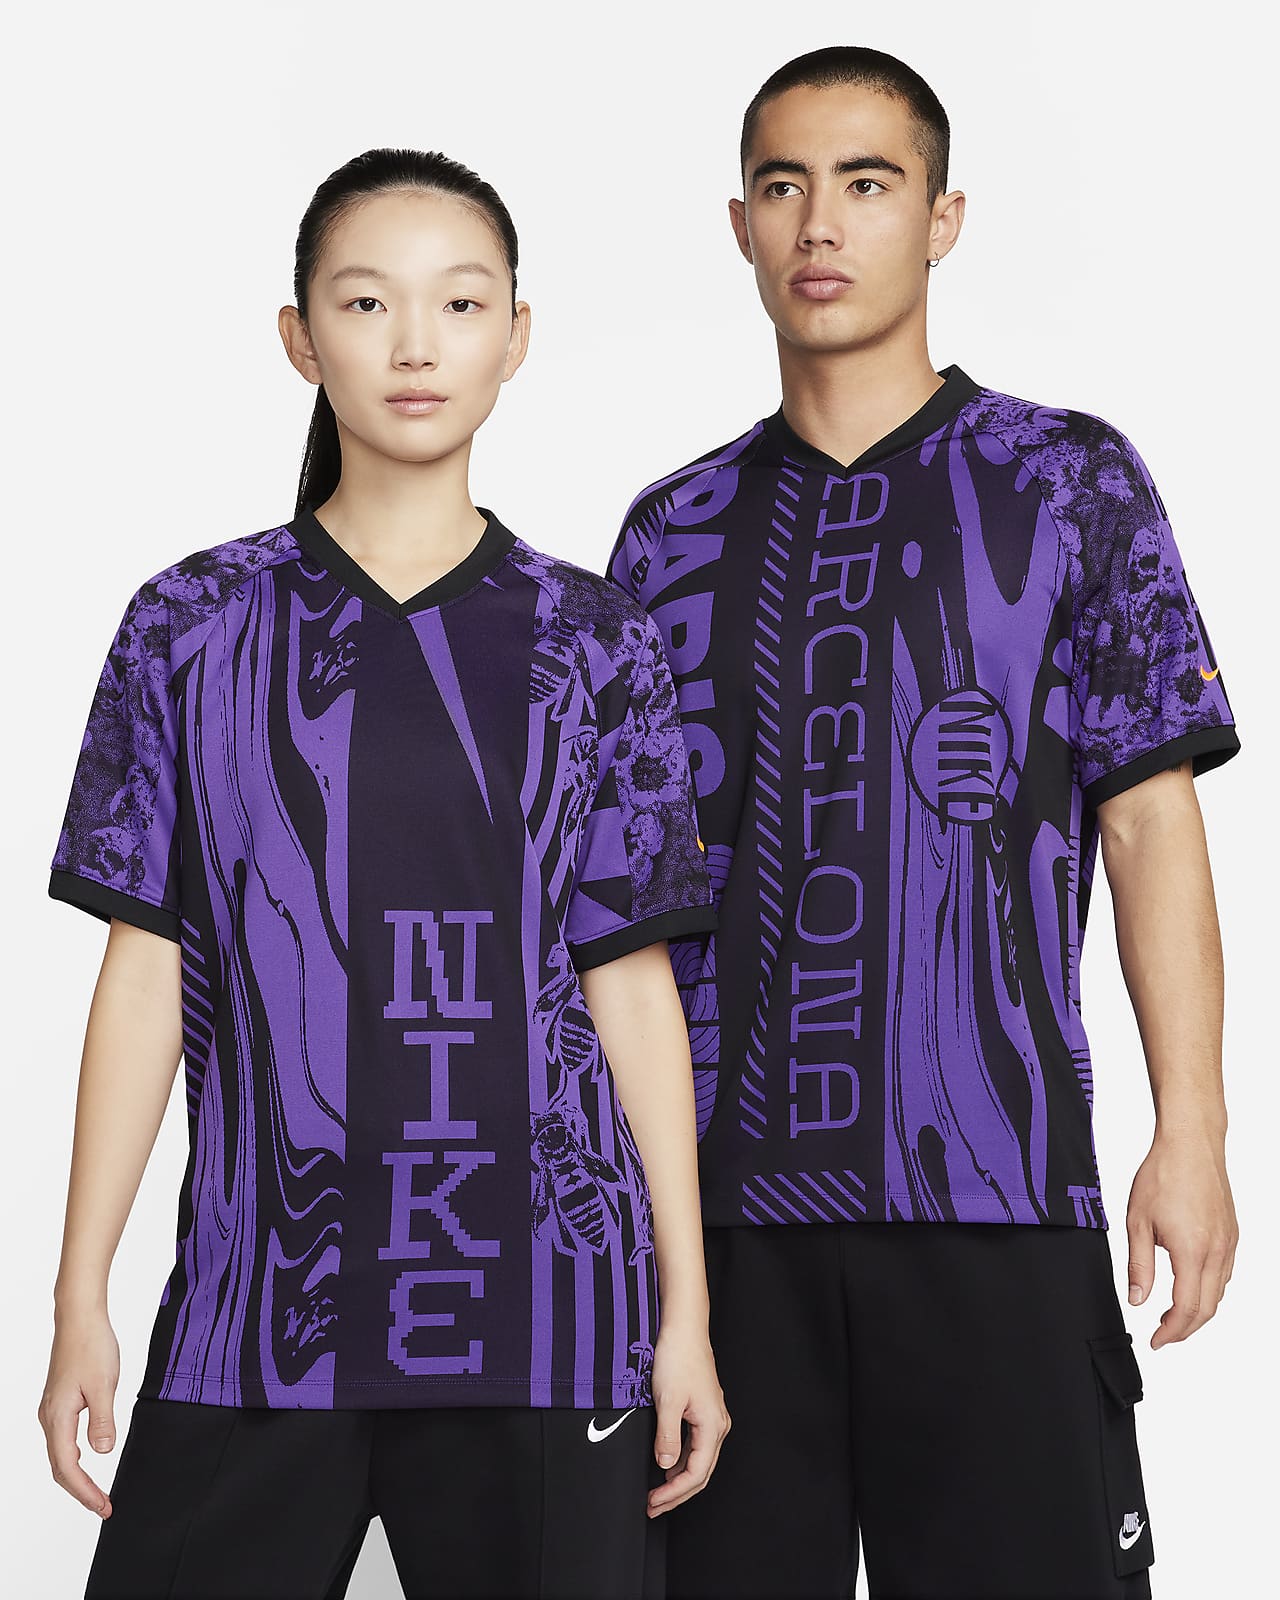 Nike Culture of Football Men's Dri-FIT Short-Sleeve Soccer Jersey